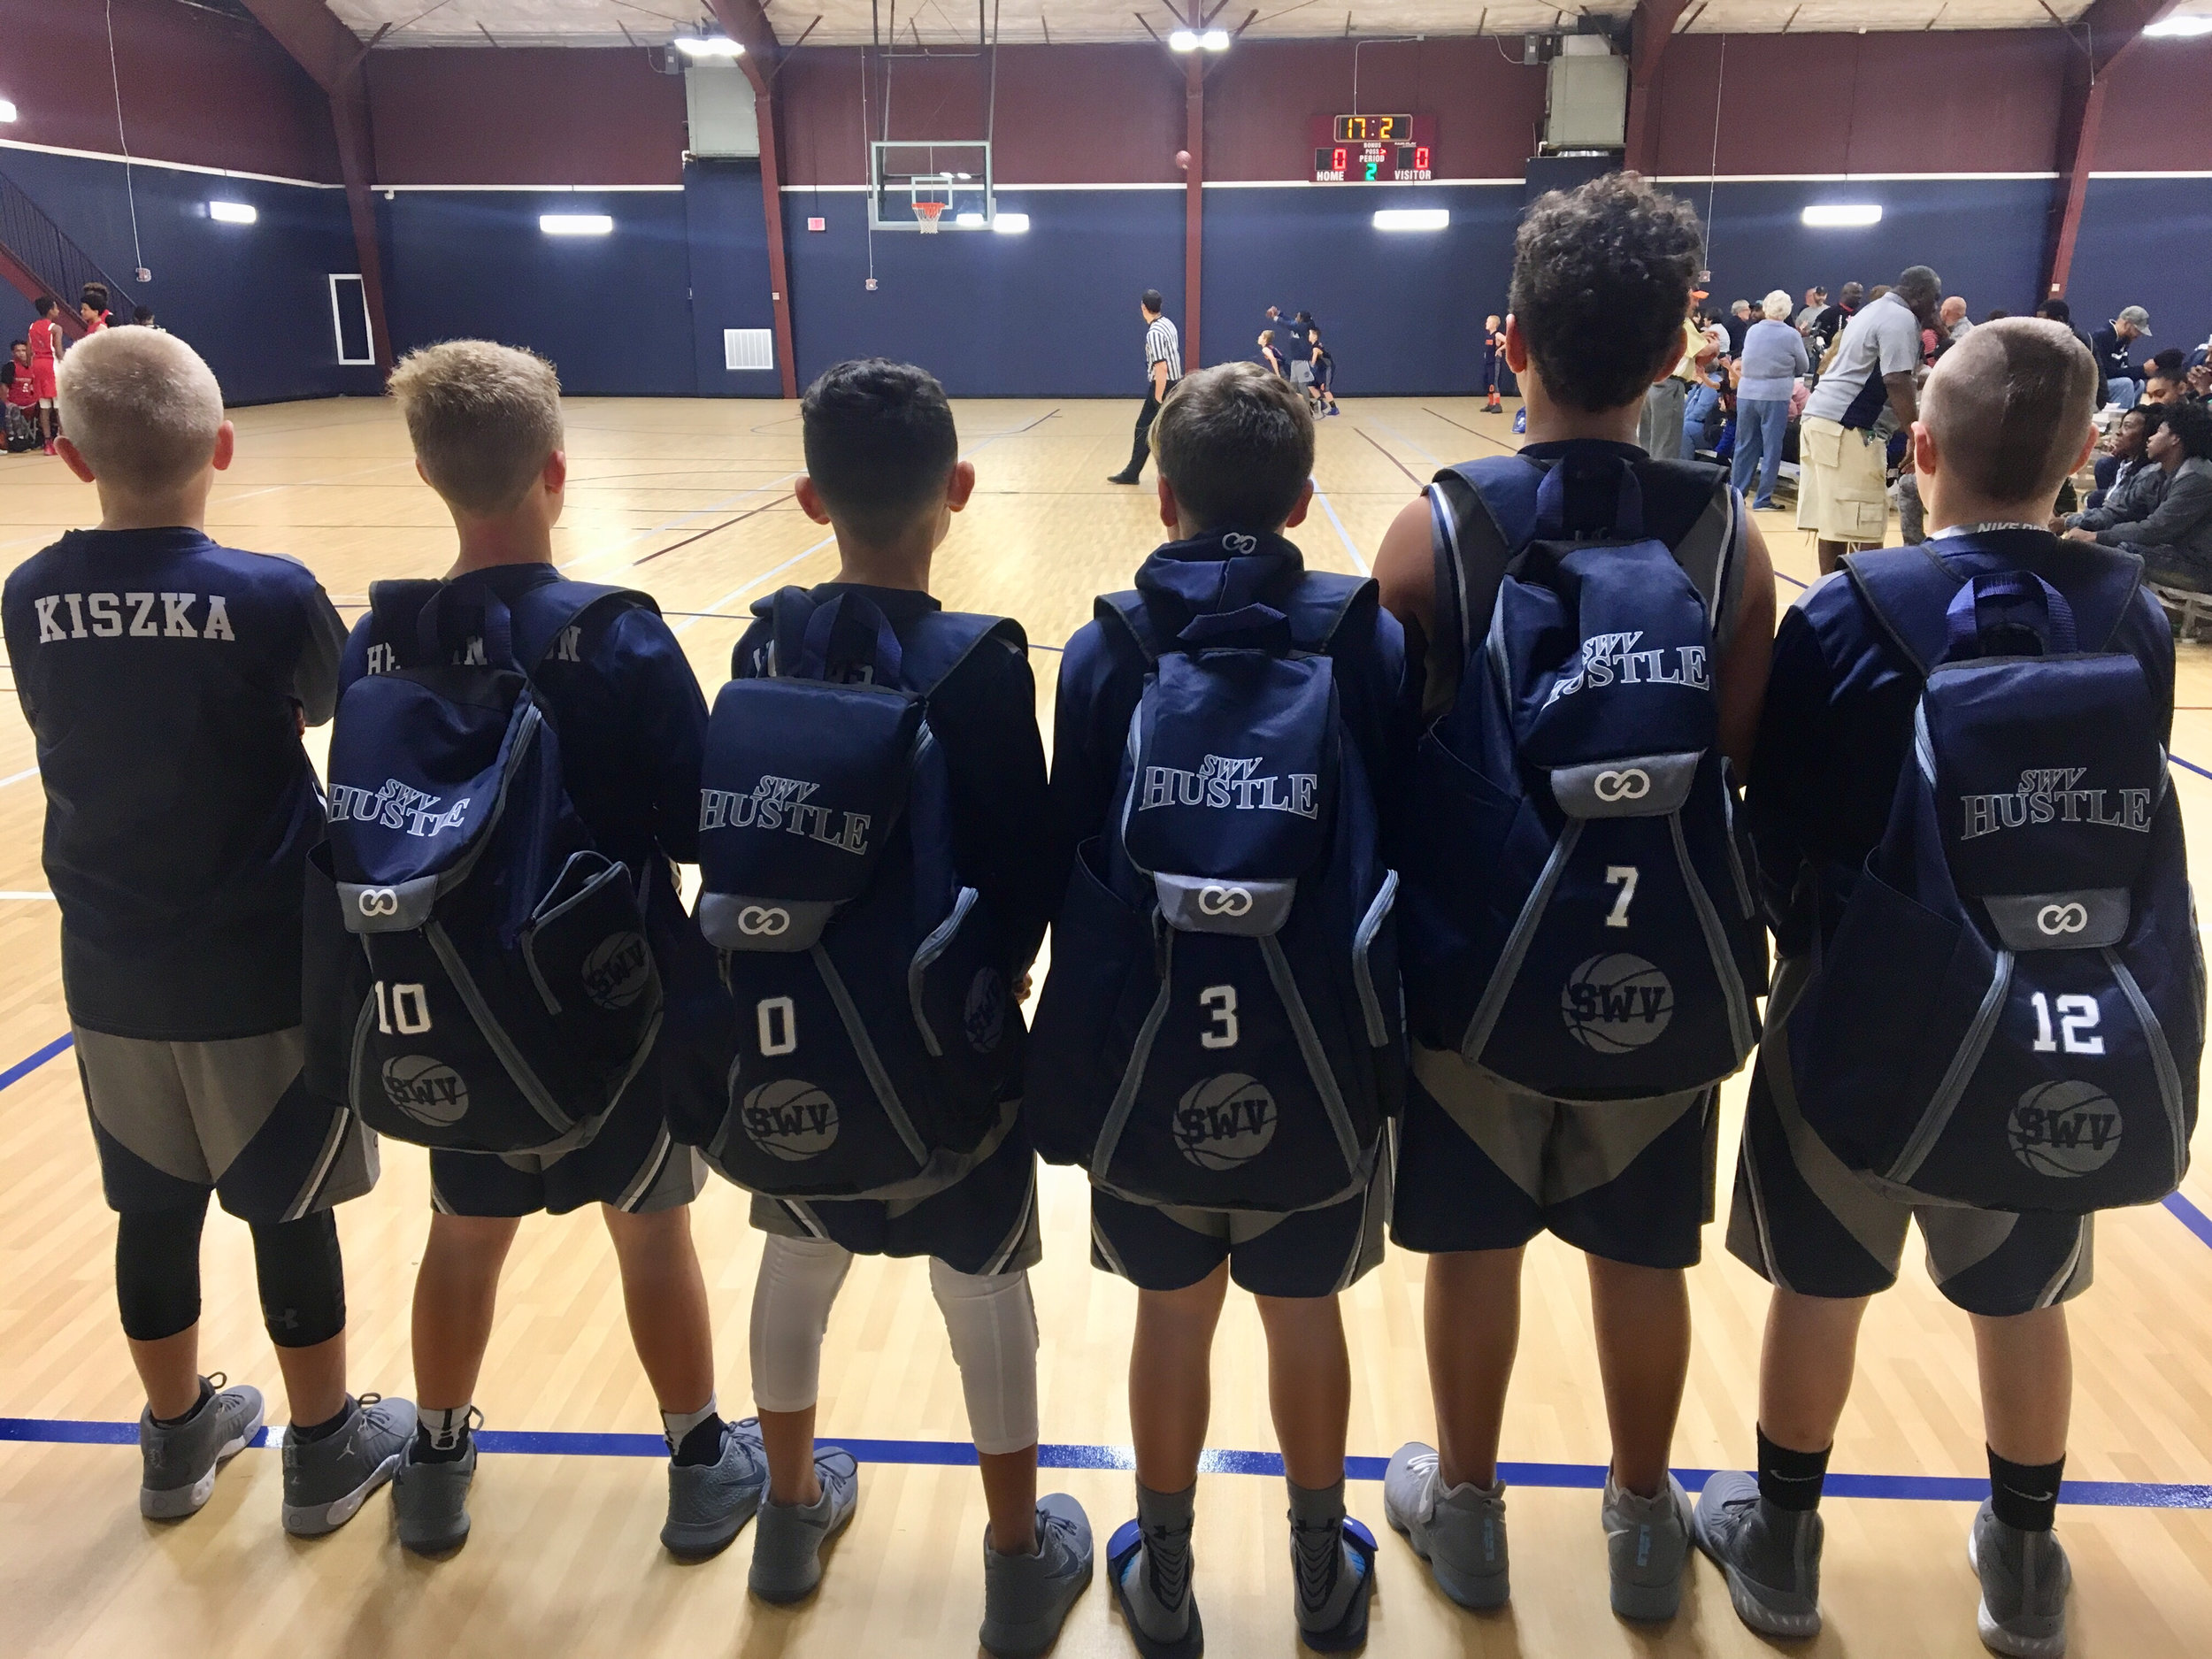 SWV HUSTLE blue gray basketball uniforms jersey shirts, shorts, backpacks